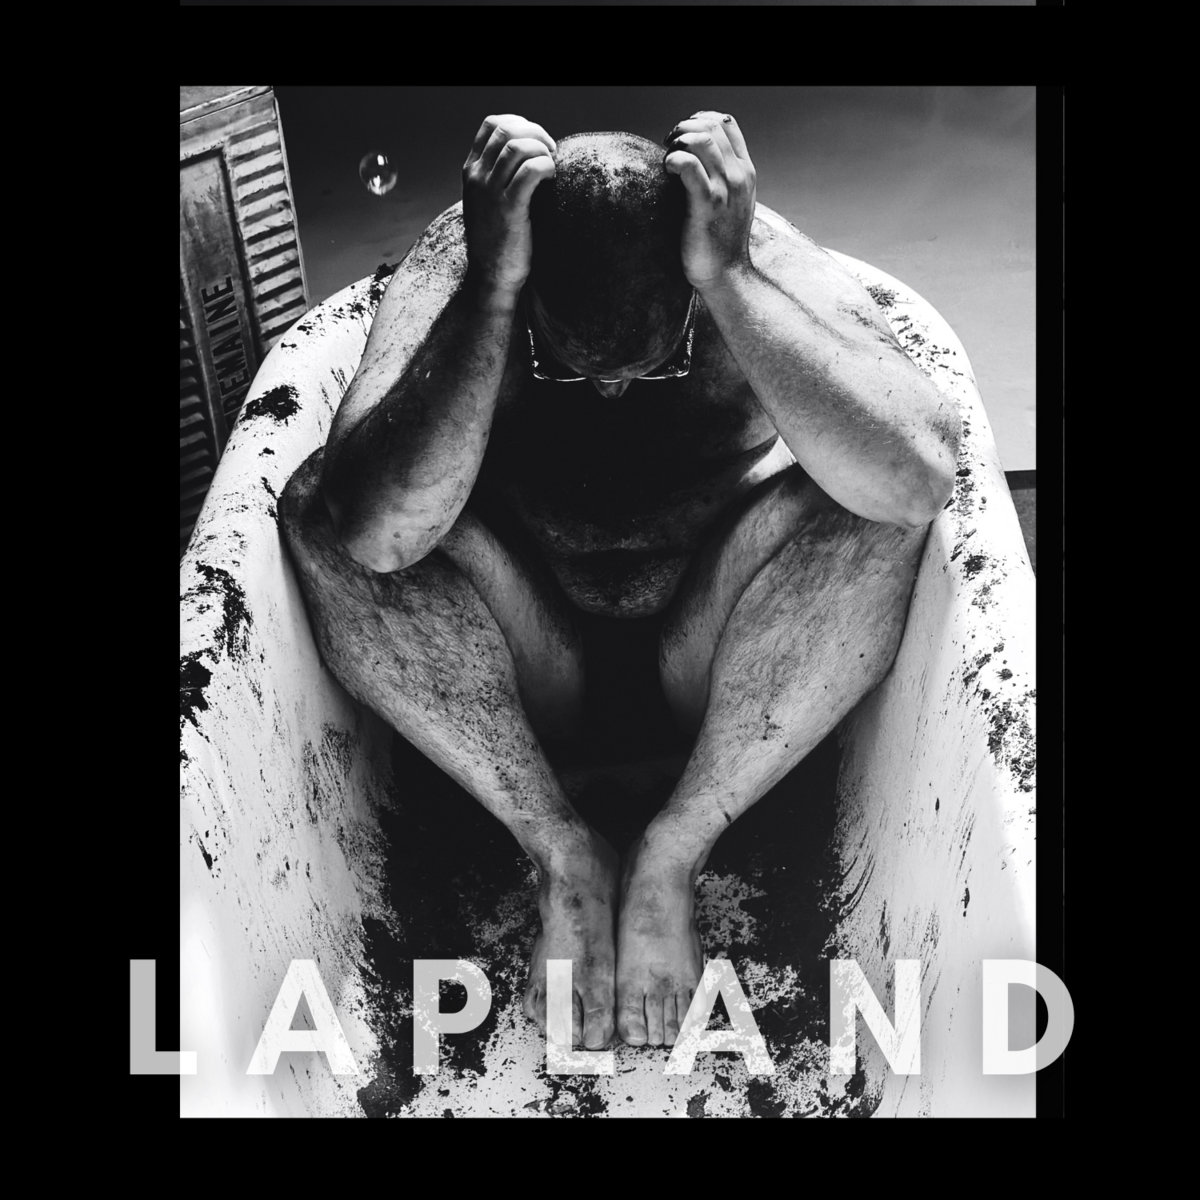 Total Chroma, “Lapland”